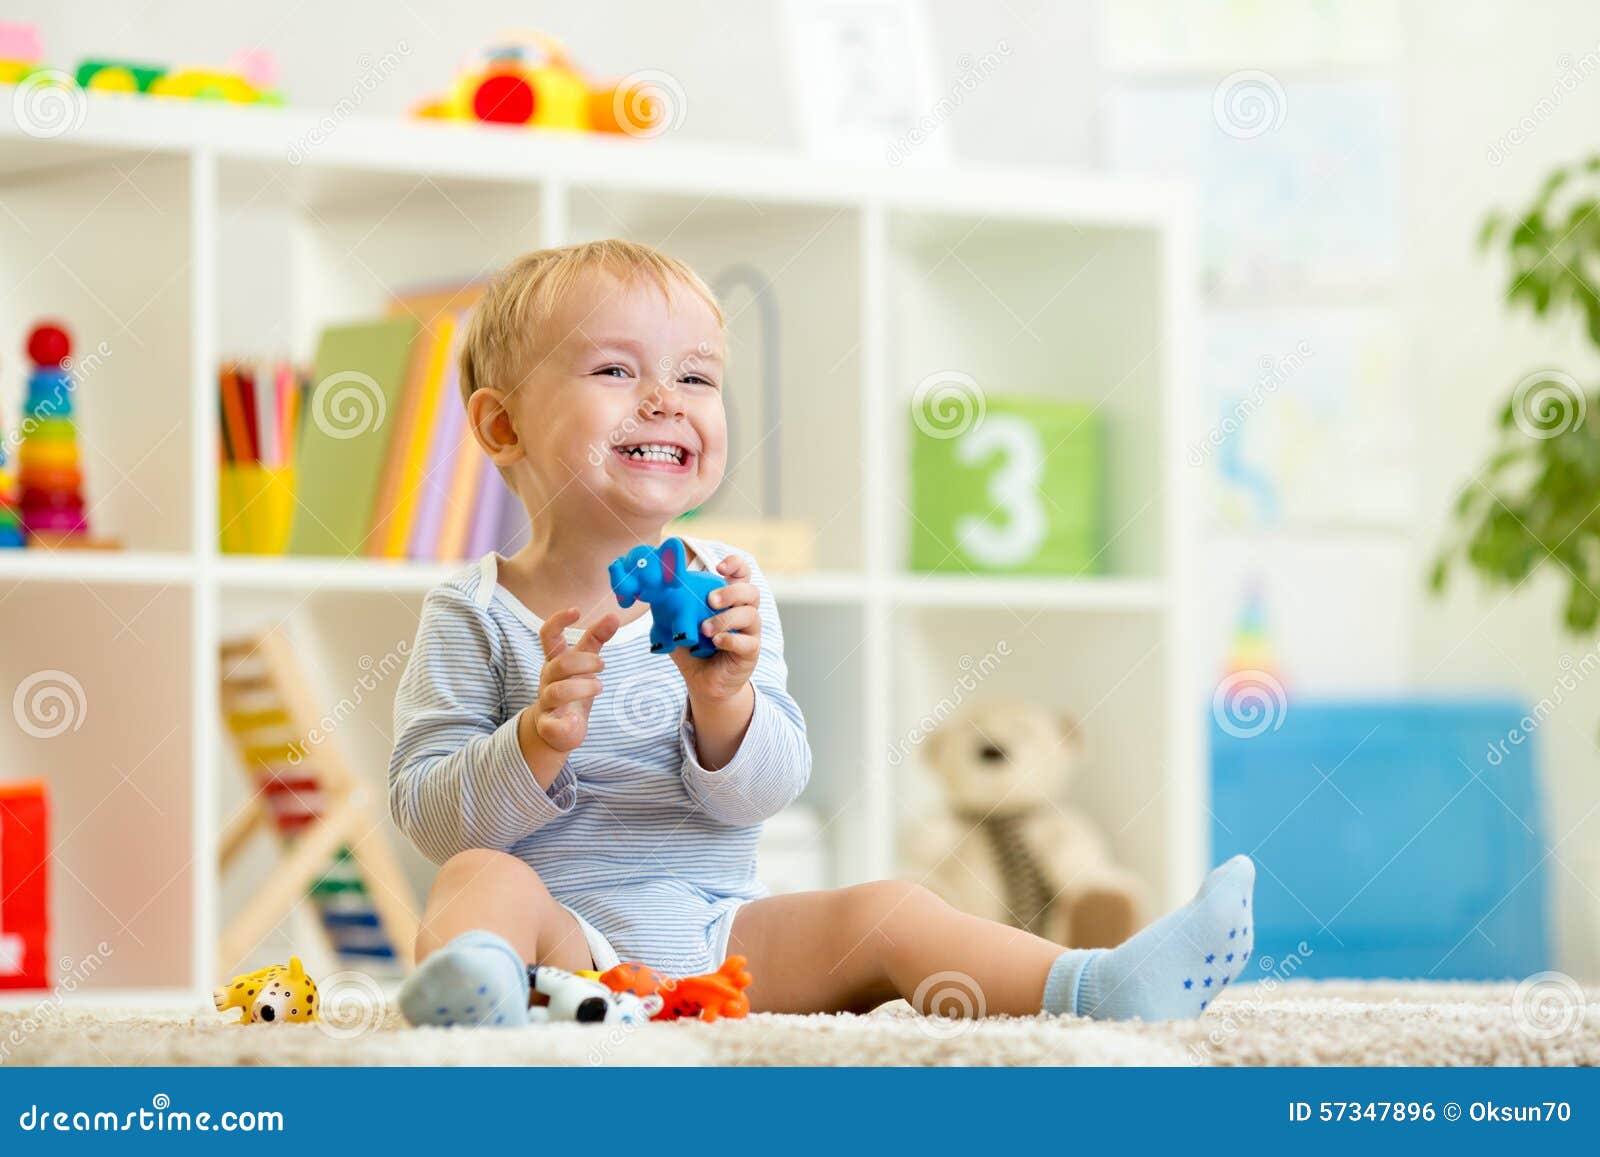 happy child holding elefant toy